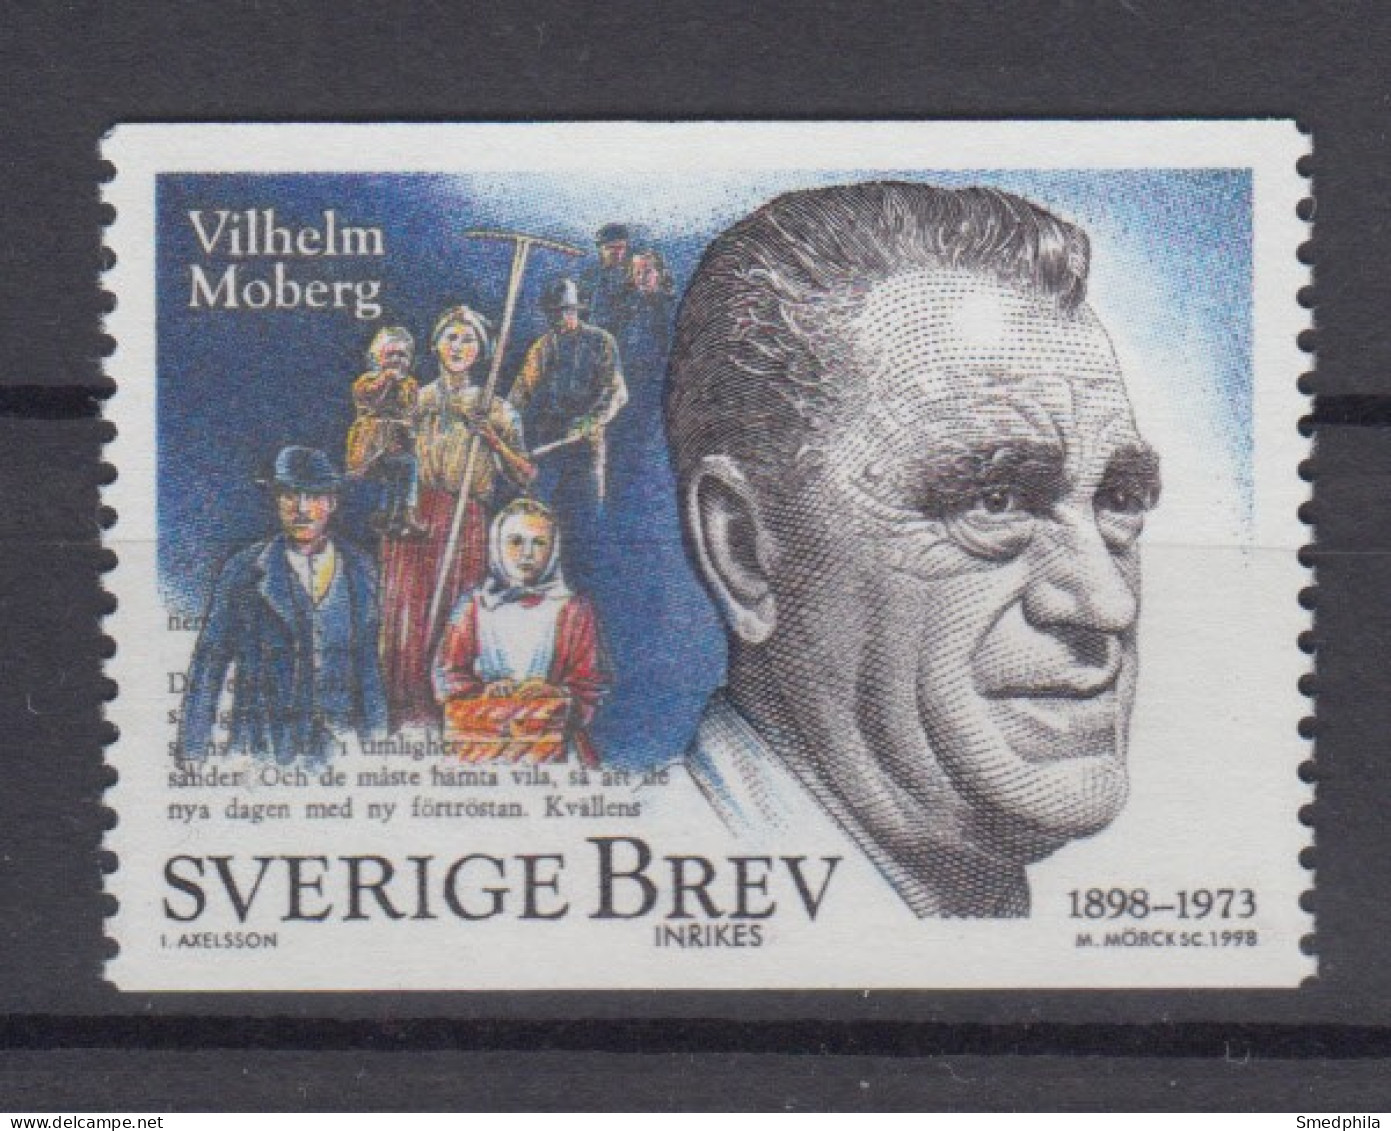 Sweden 1998 - Michel 2070 MNH ** - Unused Stamps